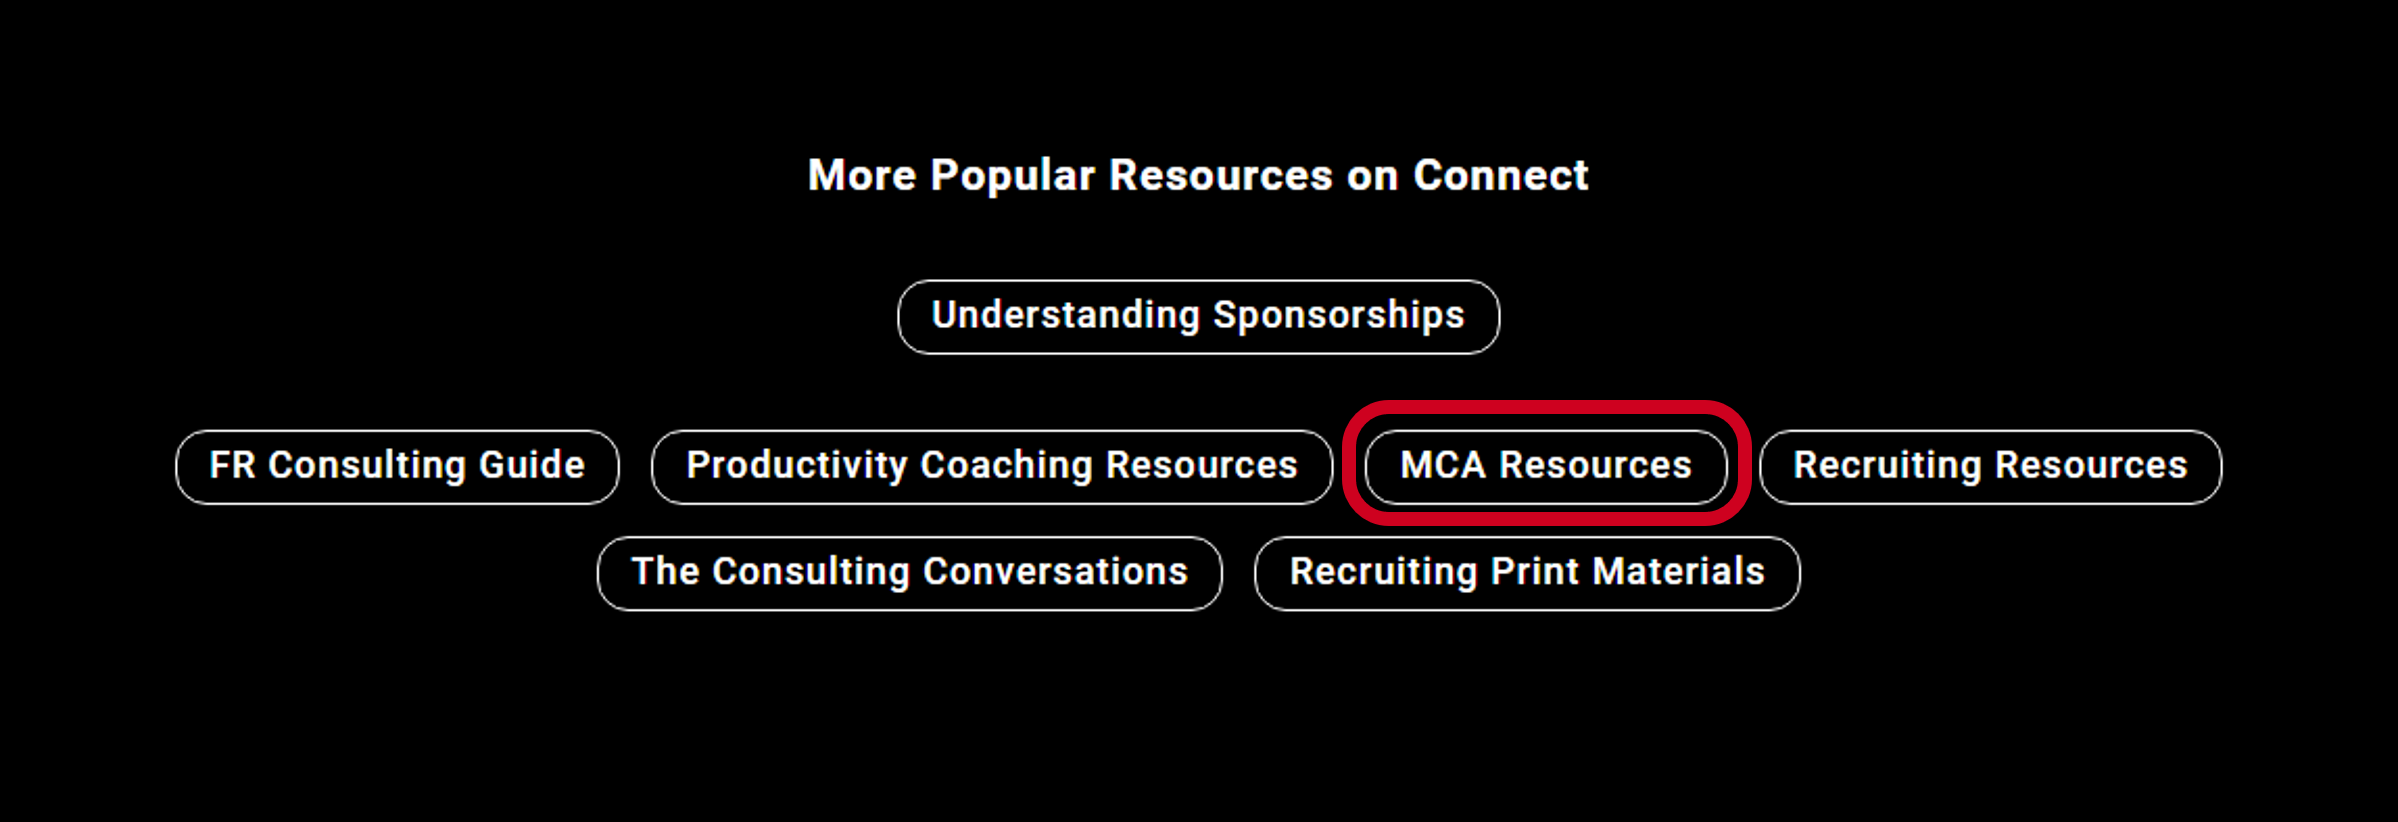 mca_mca_resources.png